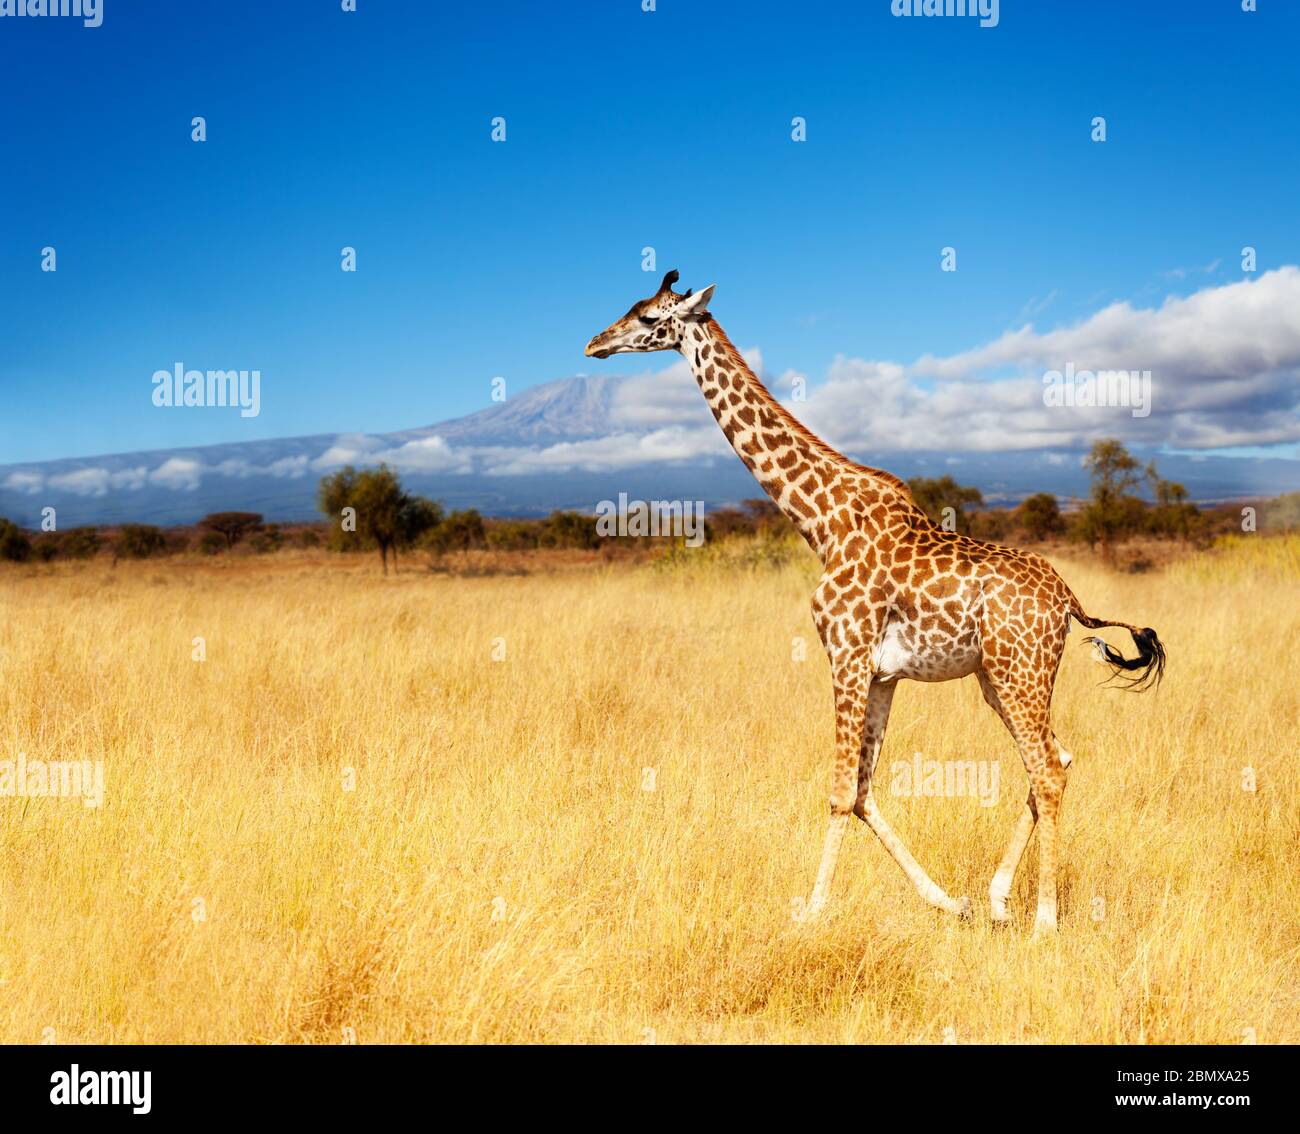 Adult giraffe Kilimanjaro mountain in Kenya Amboseli park Stock Photo